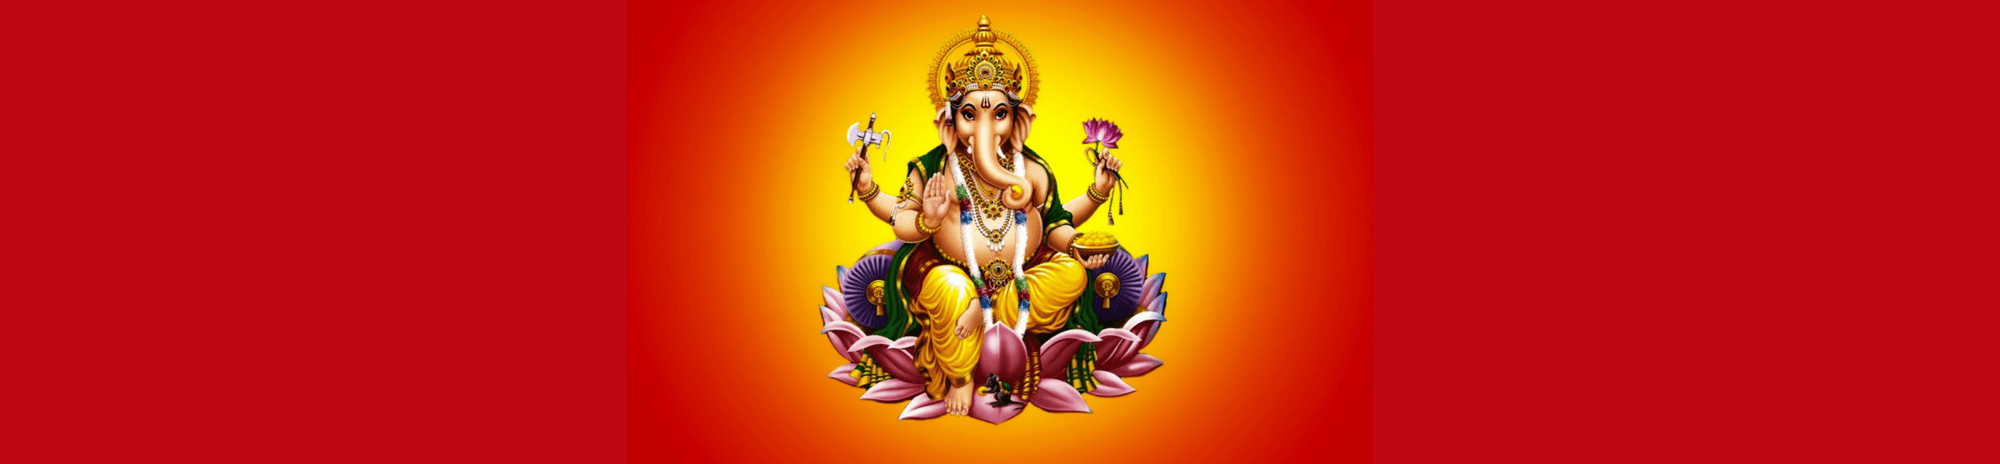 The Hindu God Ganesh Who Is This Elephant Headed Fellow